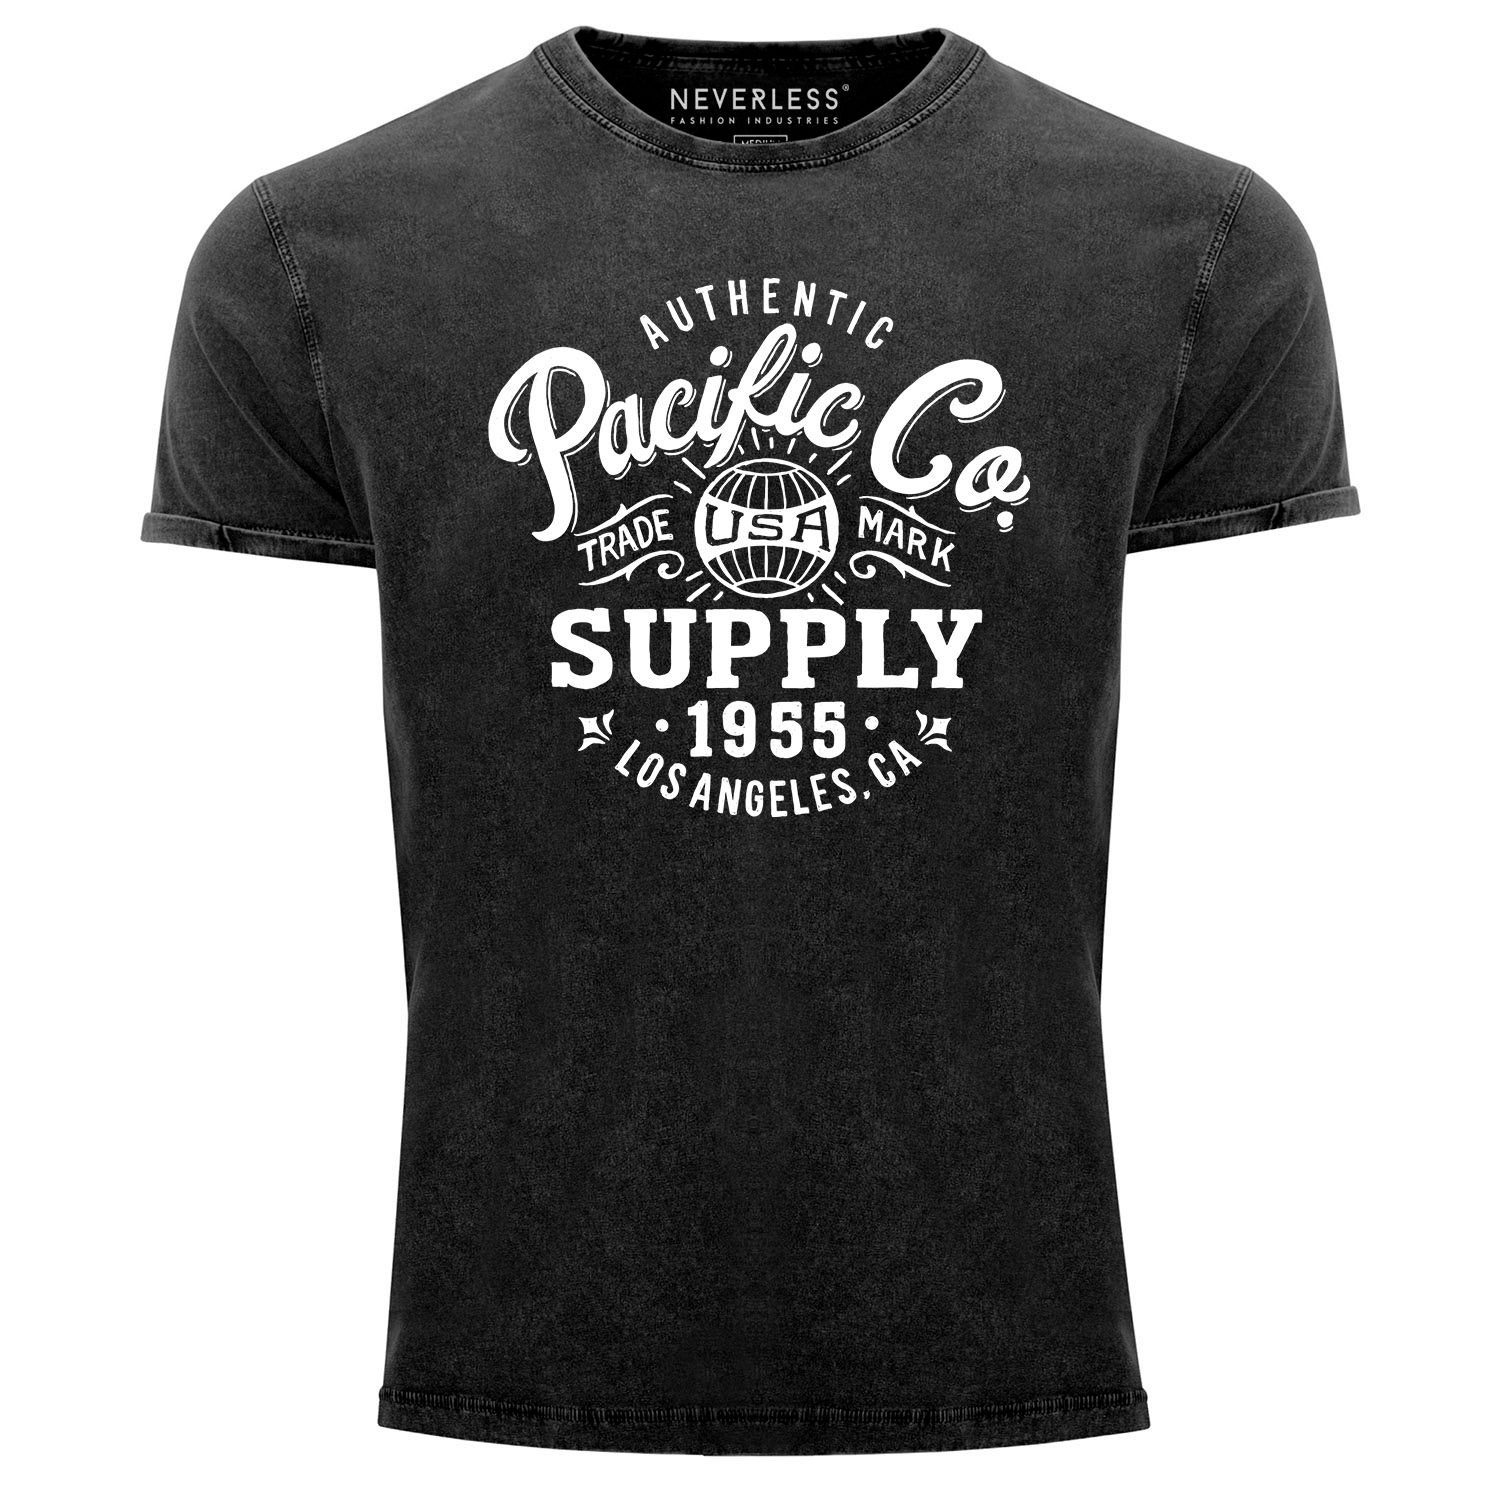 Neverless Print-Shirt Herren T-Shirt Vintage Shirt Retro Washed Aufdruck Used Neverless® mit Print schwarz